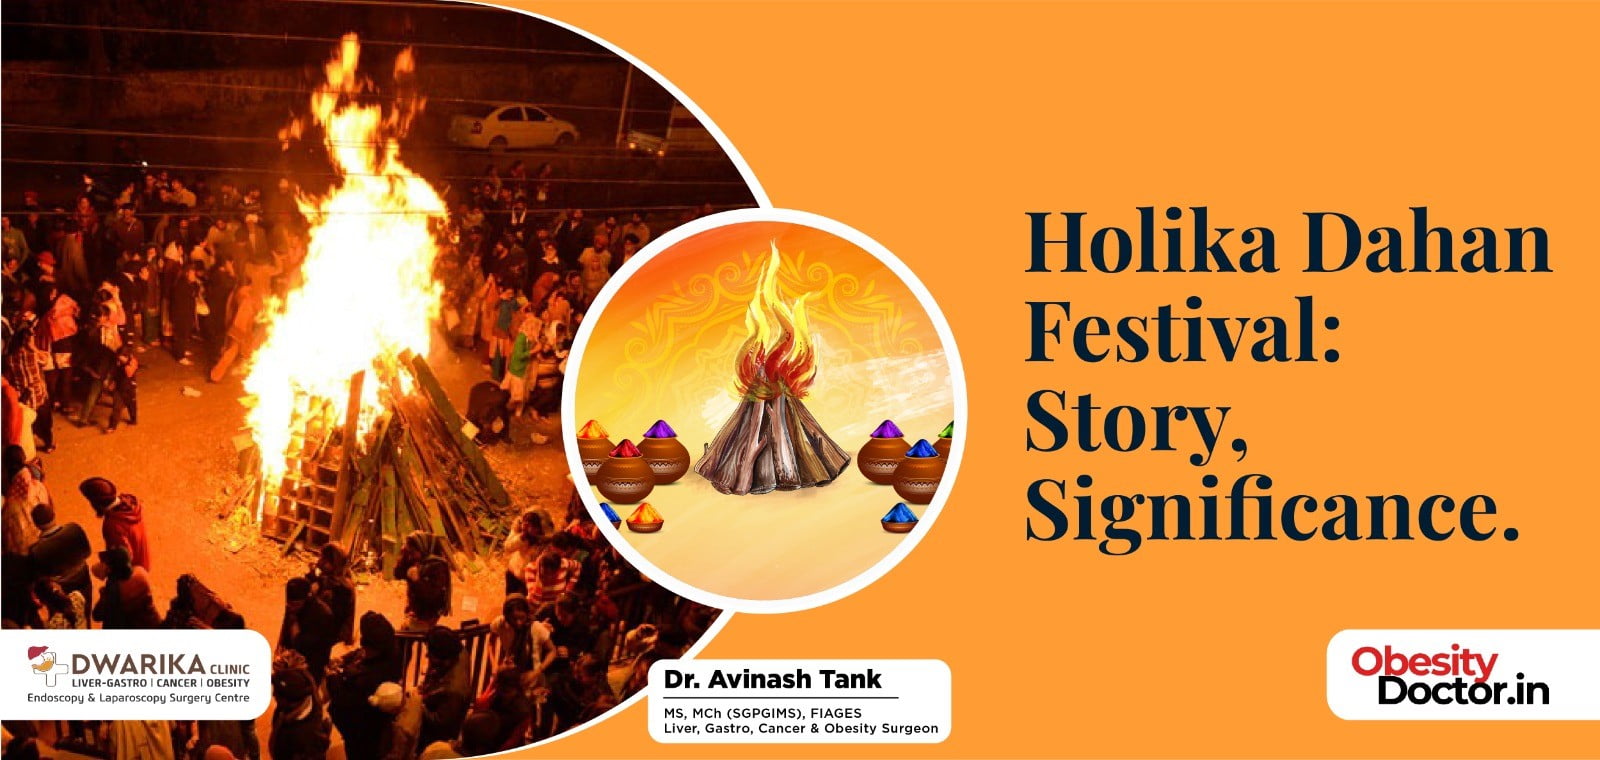 Holika Dahan Festival: Story, Significance.